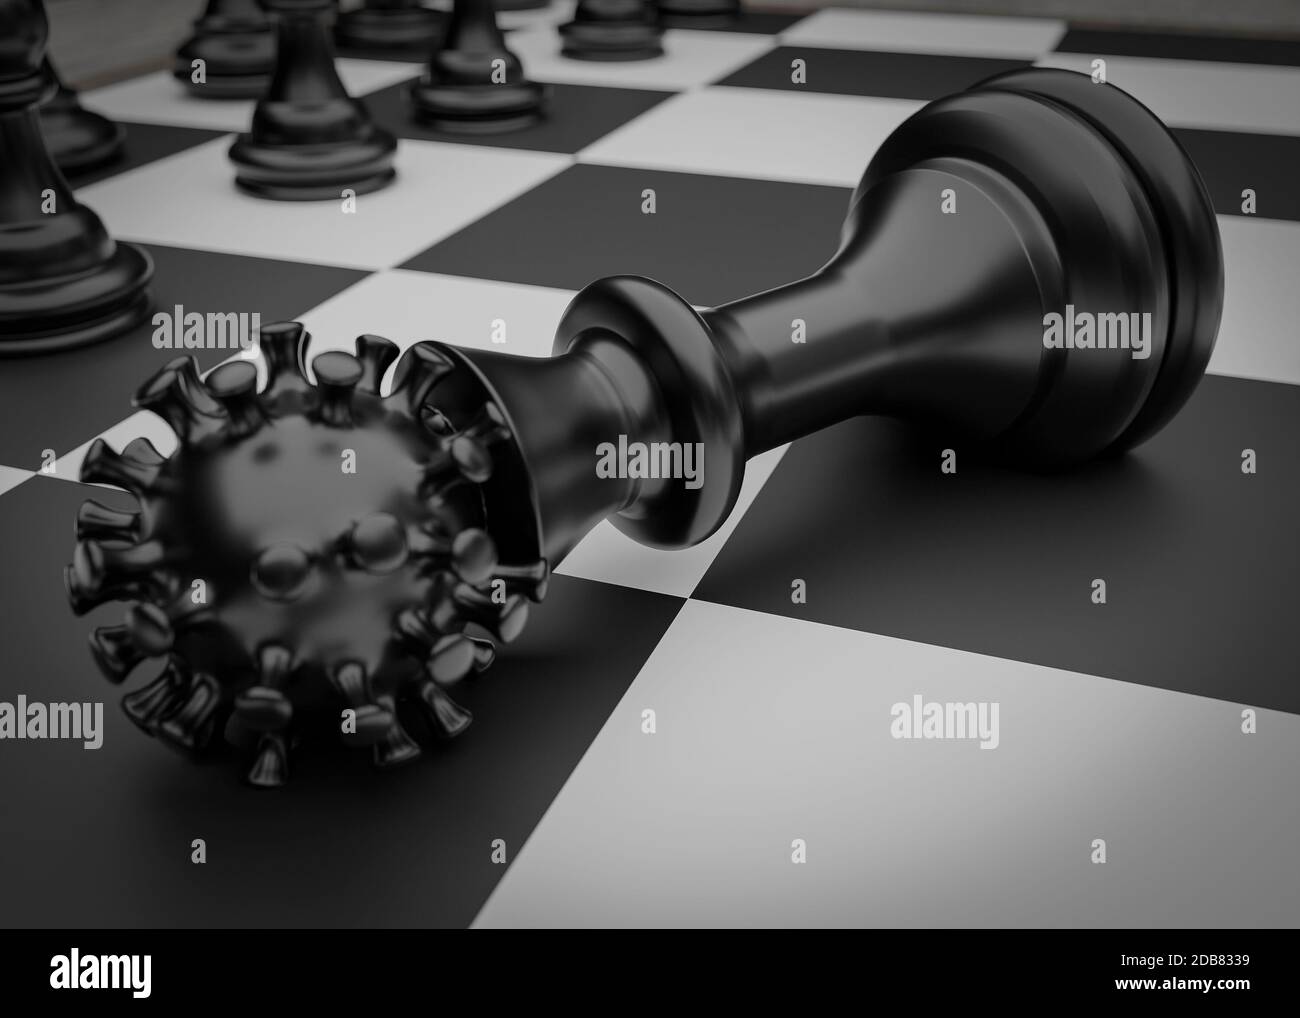 Vacuum against Coronavirus. Chess concept. 3d rendering.3d illustration Stock Photo